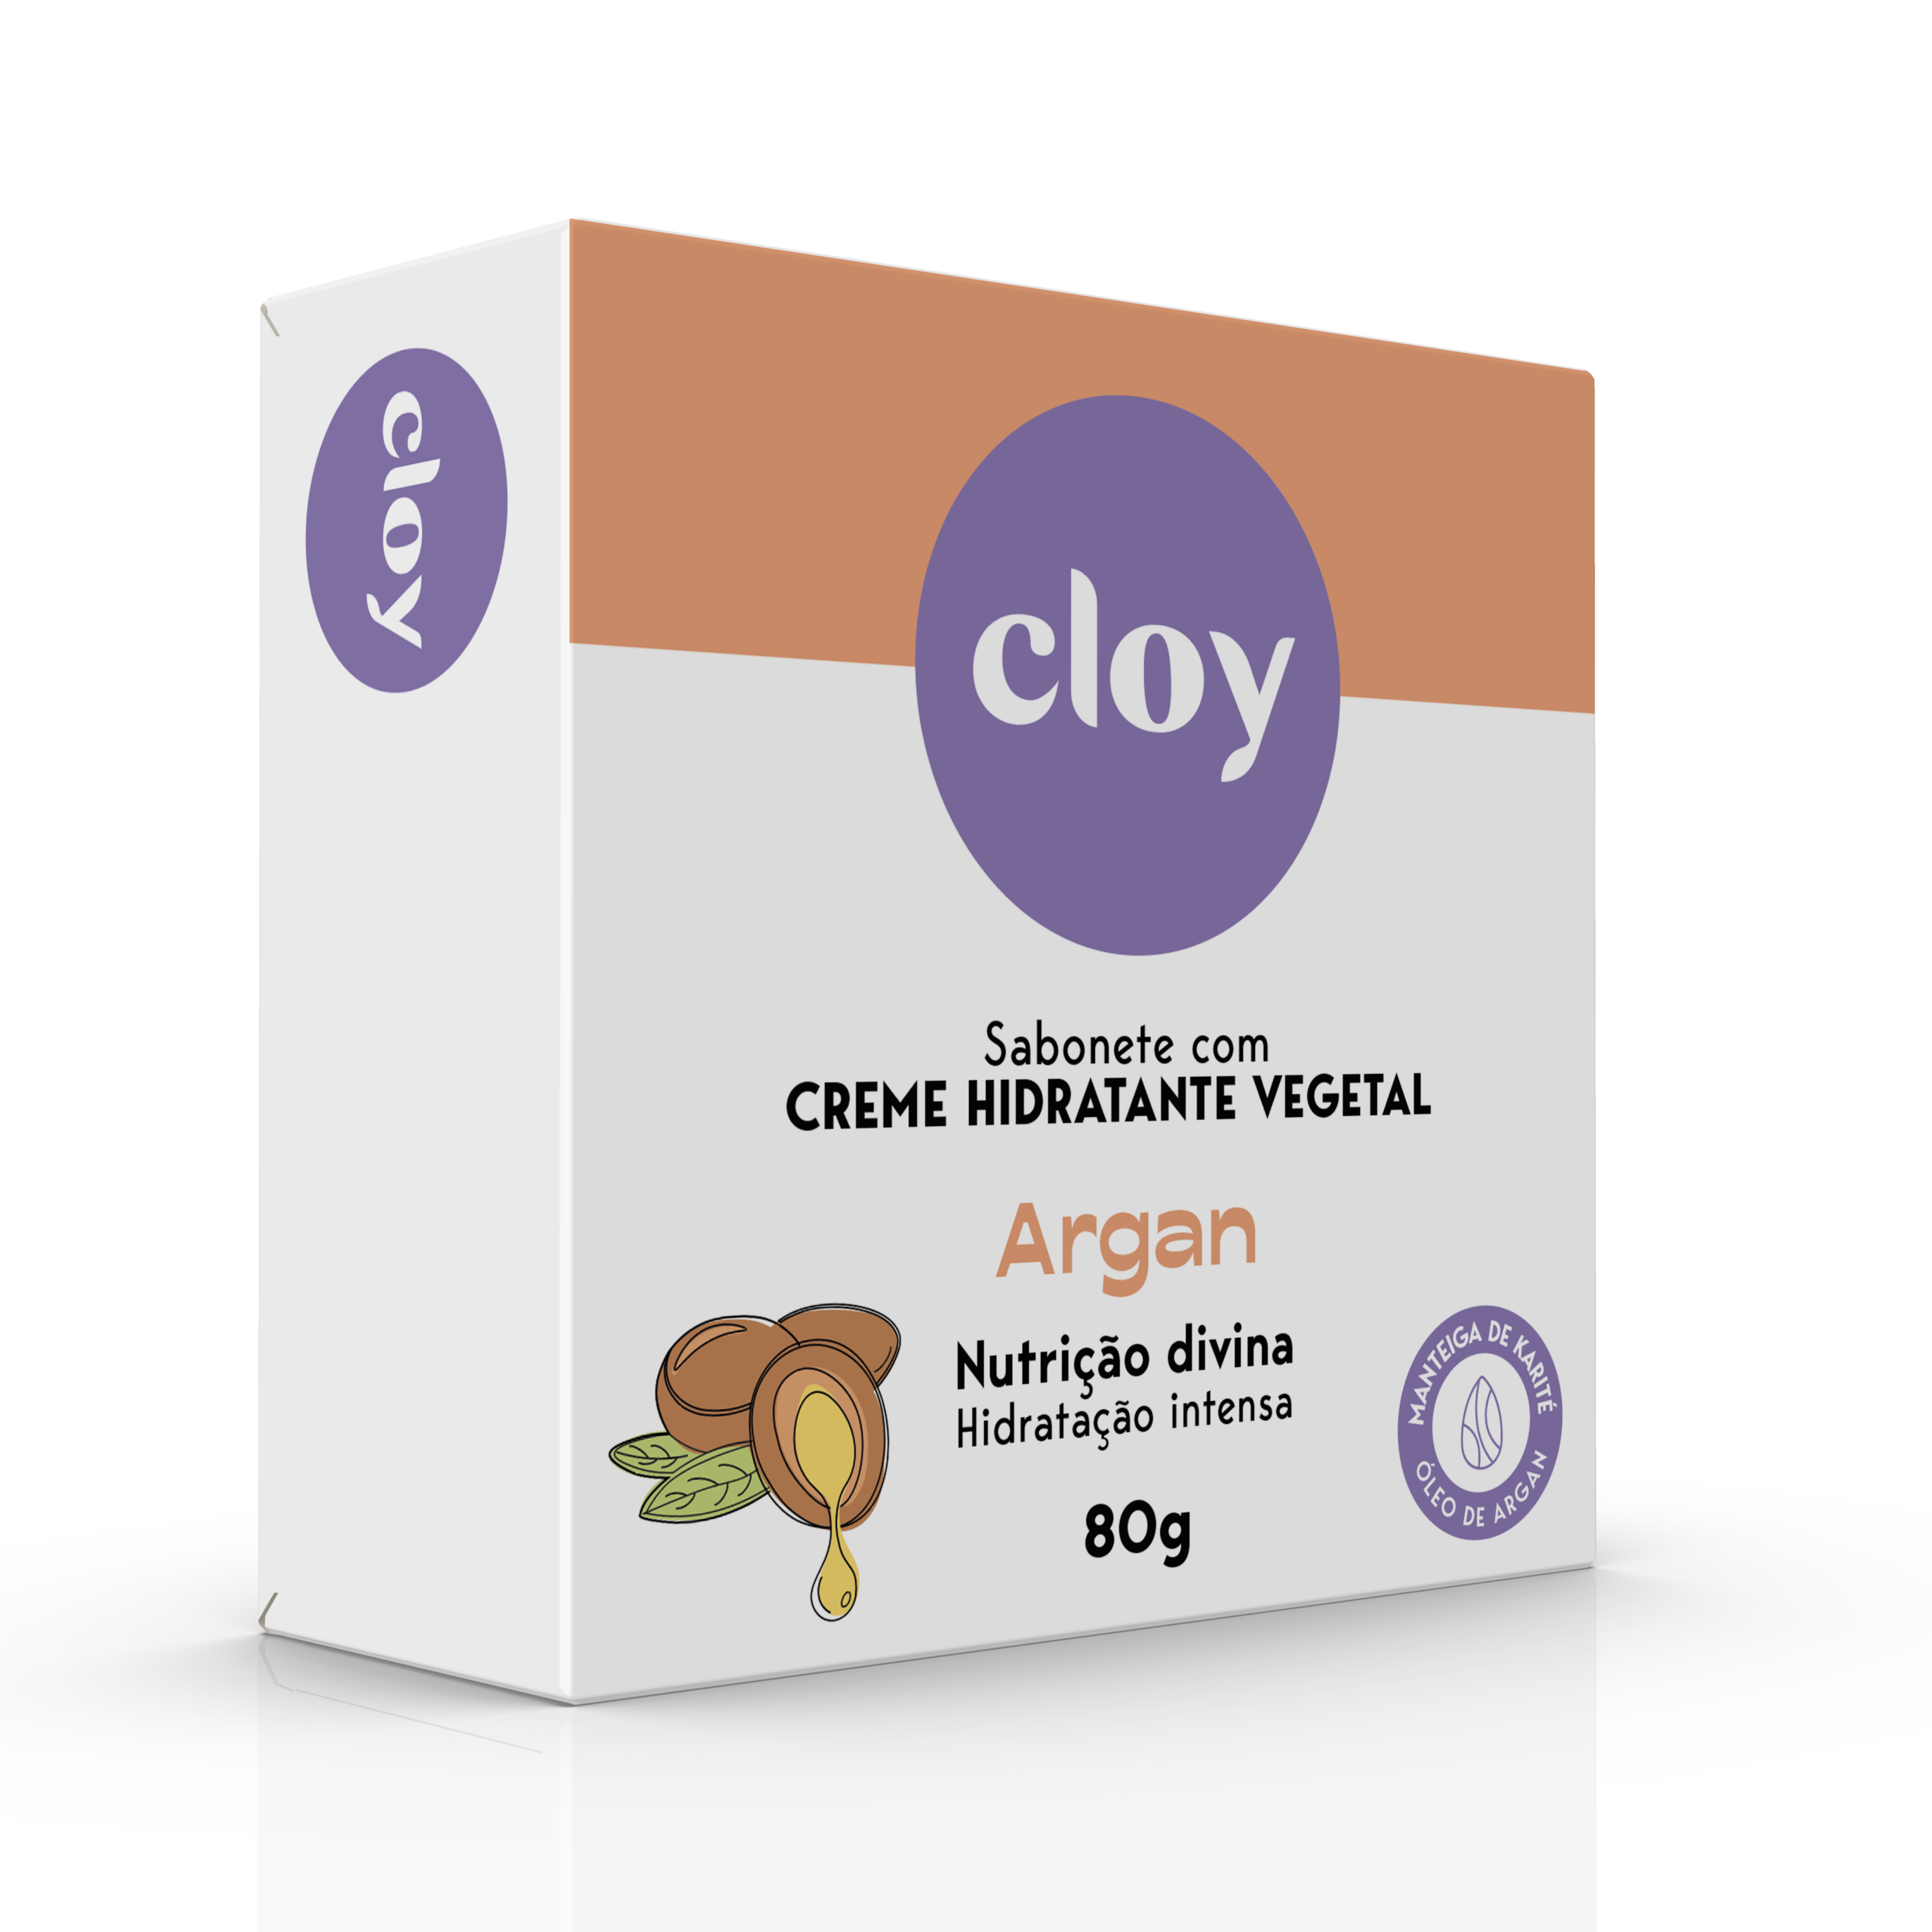 Cloy-Sintonize-o-seu-corpo-sabonete-ARGAN-80G-frente-2